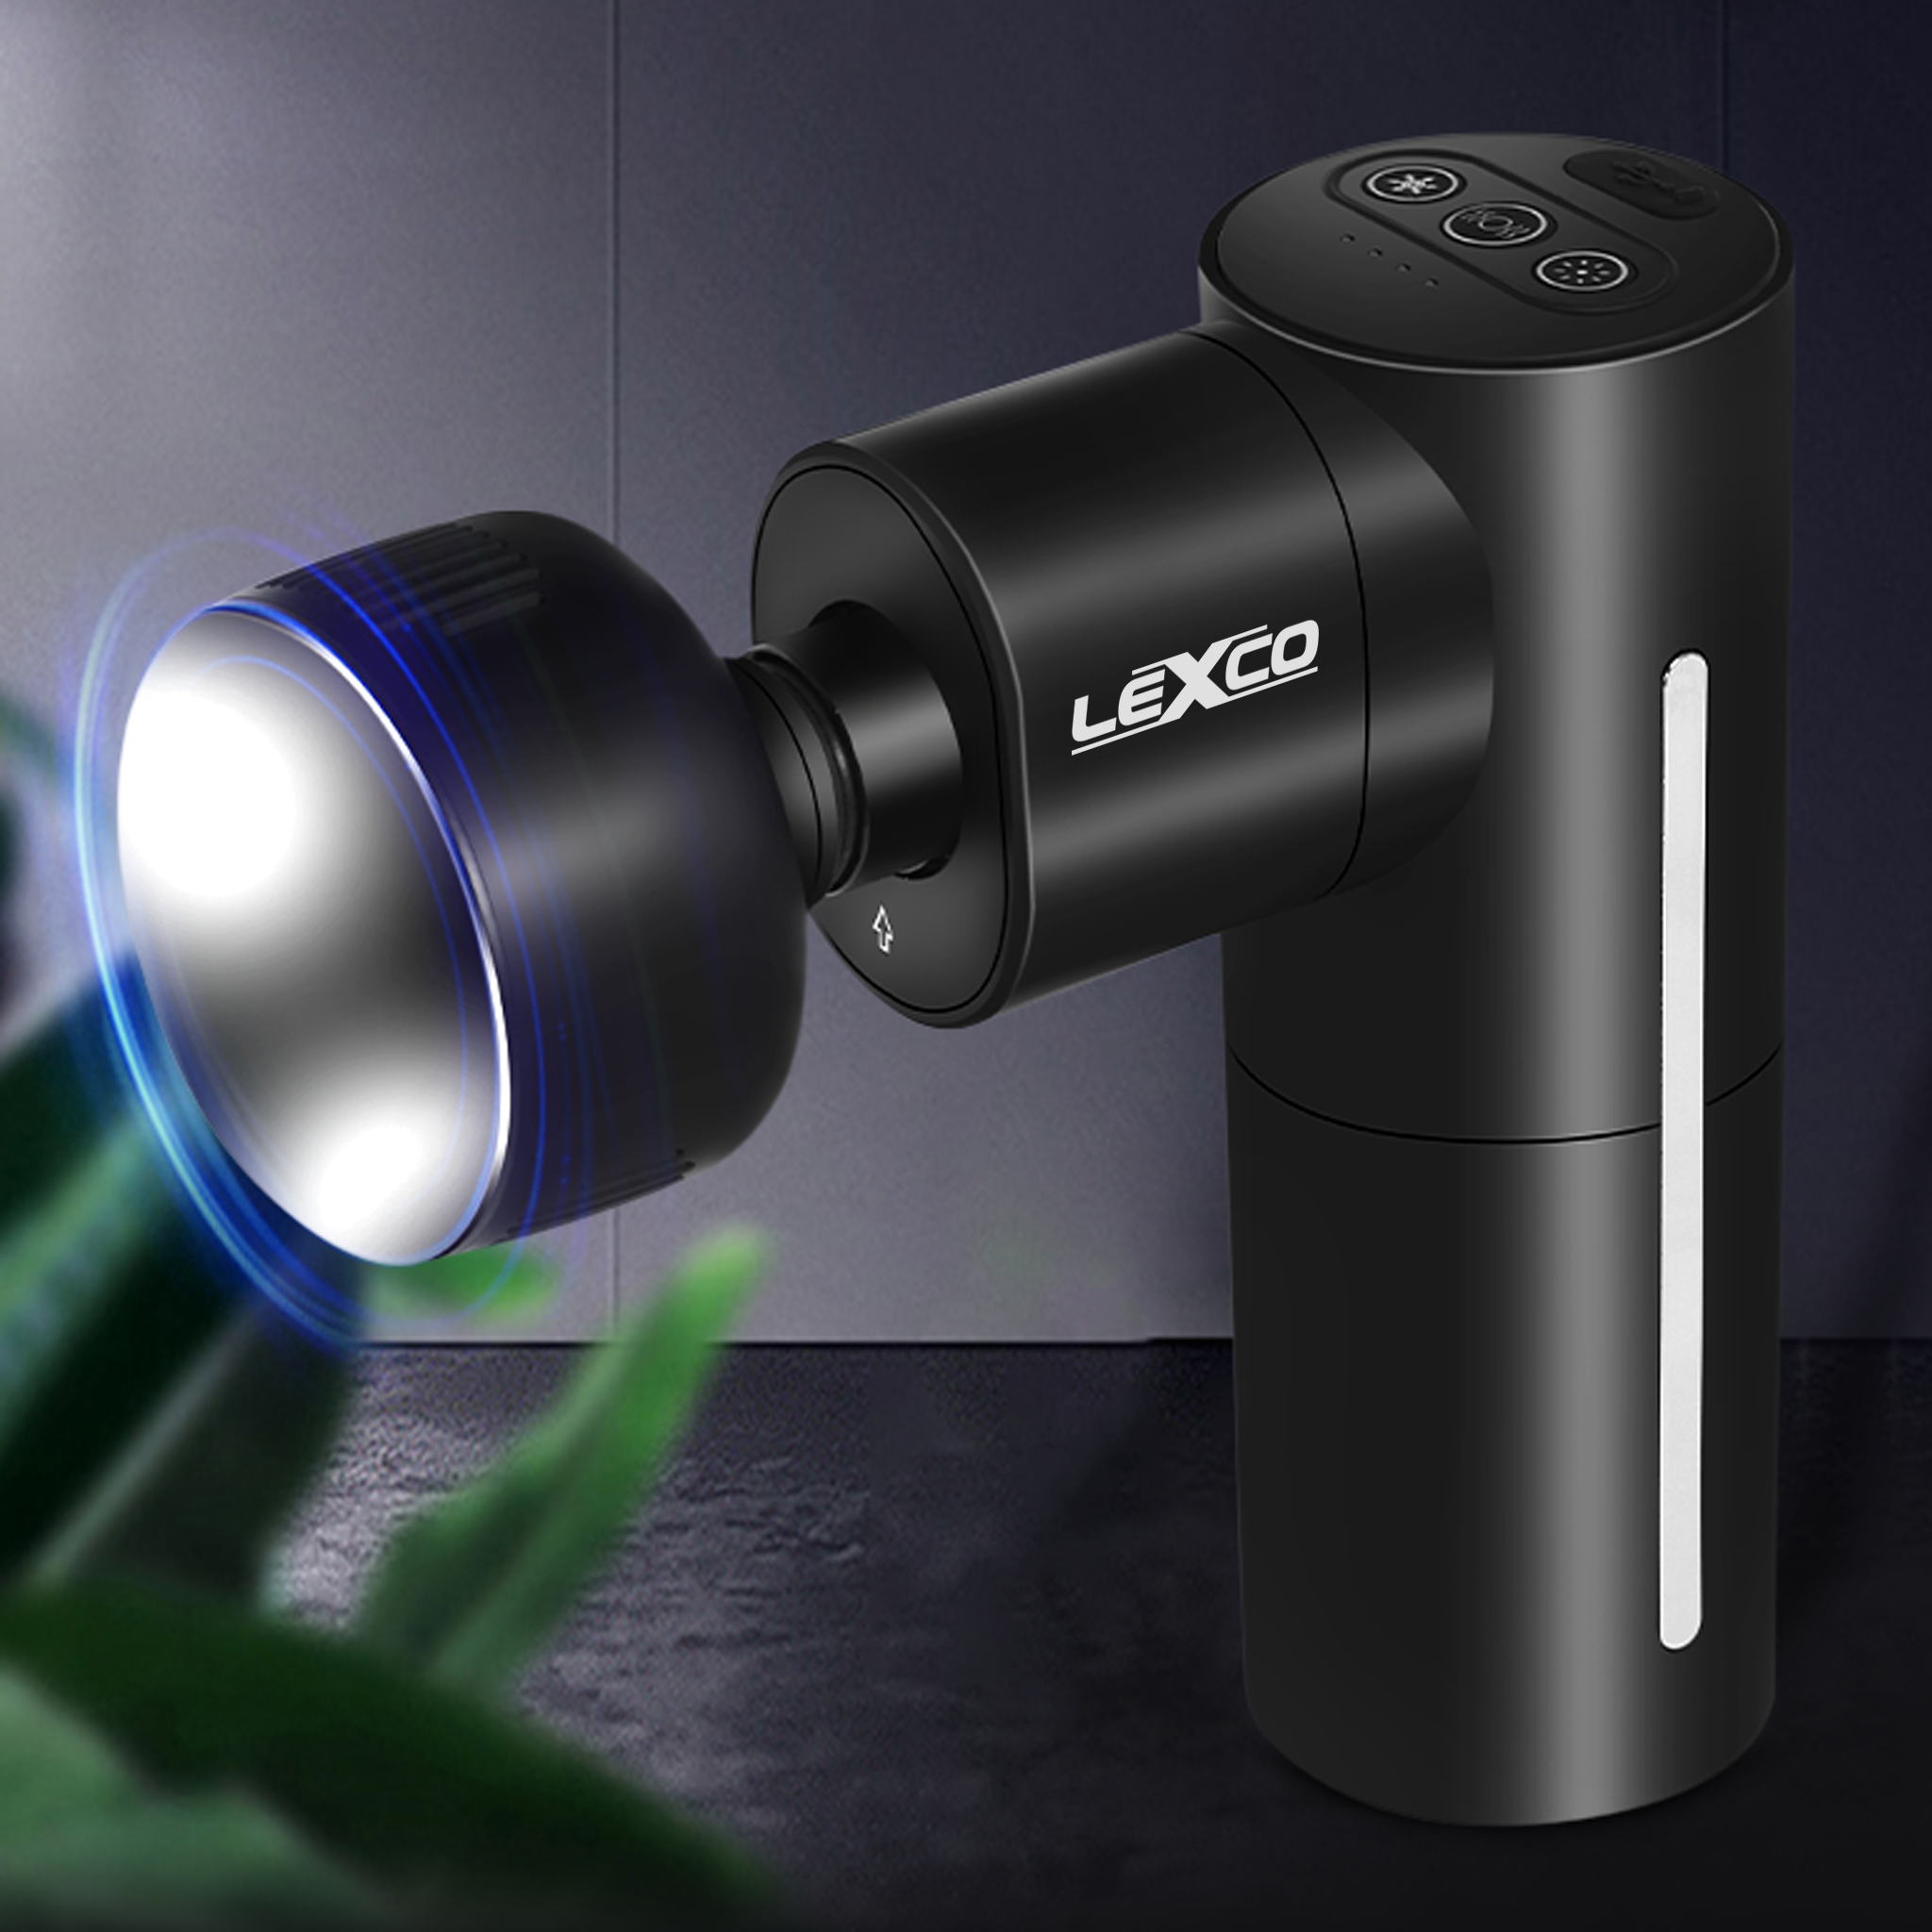 Lexco Hot & Cold Massage Gun